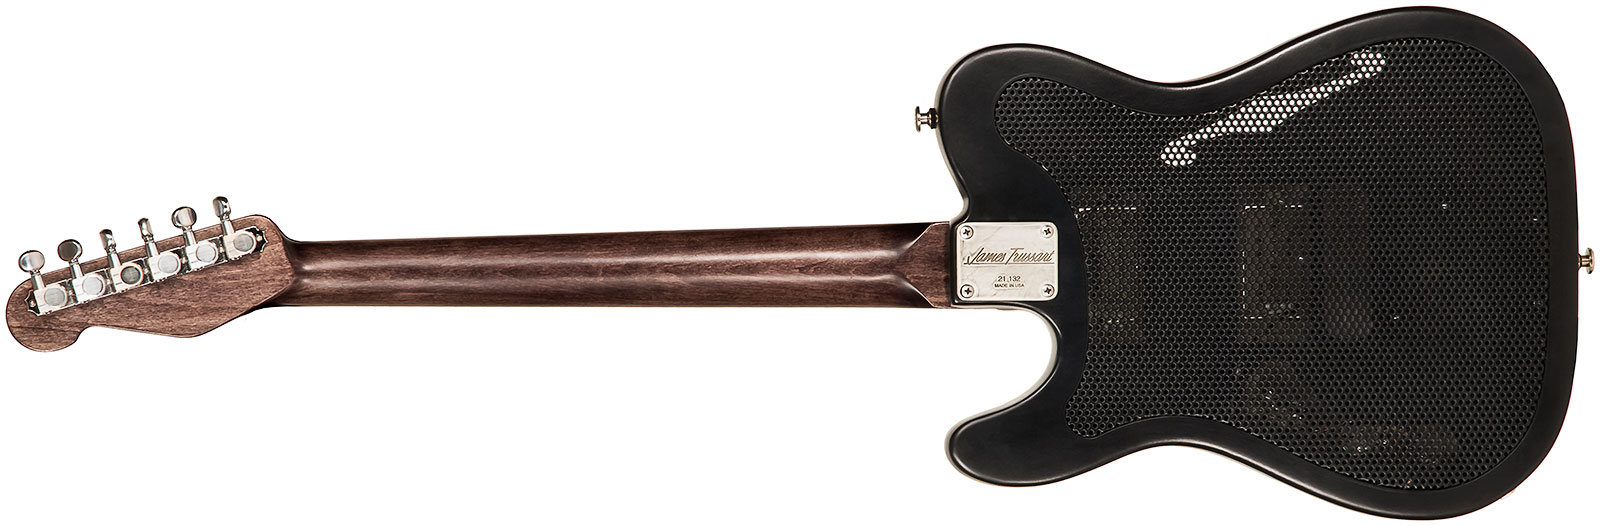 James Trussart Deluxe Steelcaster Perf.back P90h Bigsby Mn #21132 - Antique Silver Paisley Engraved Satin Black - Televorm elektrische gitaar - Variat